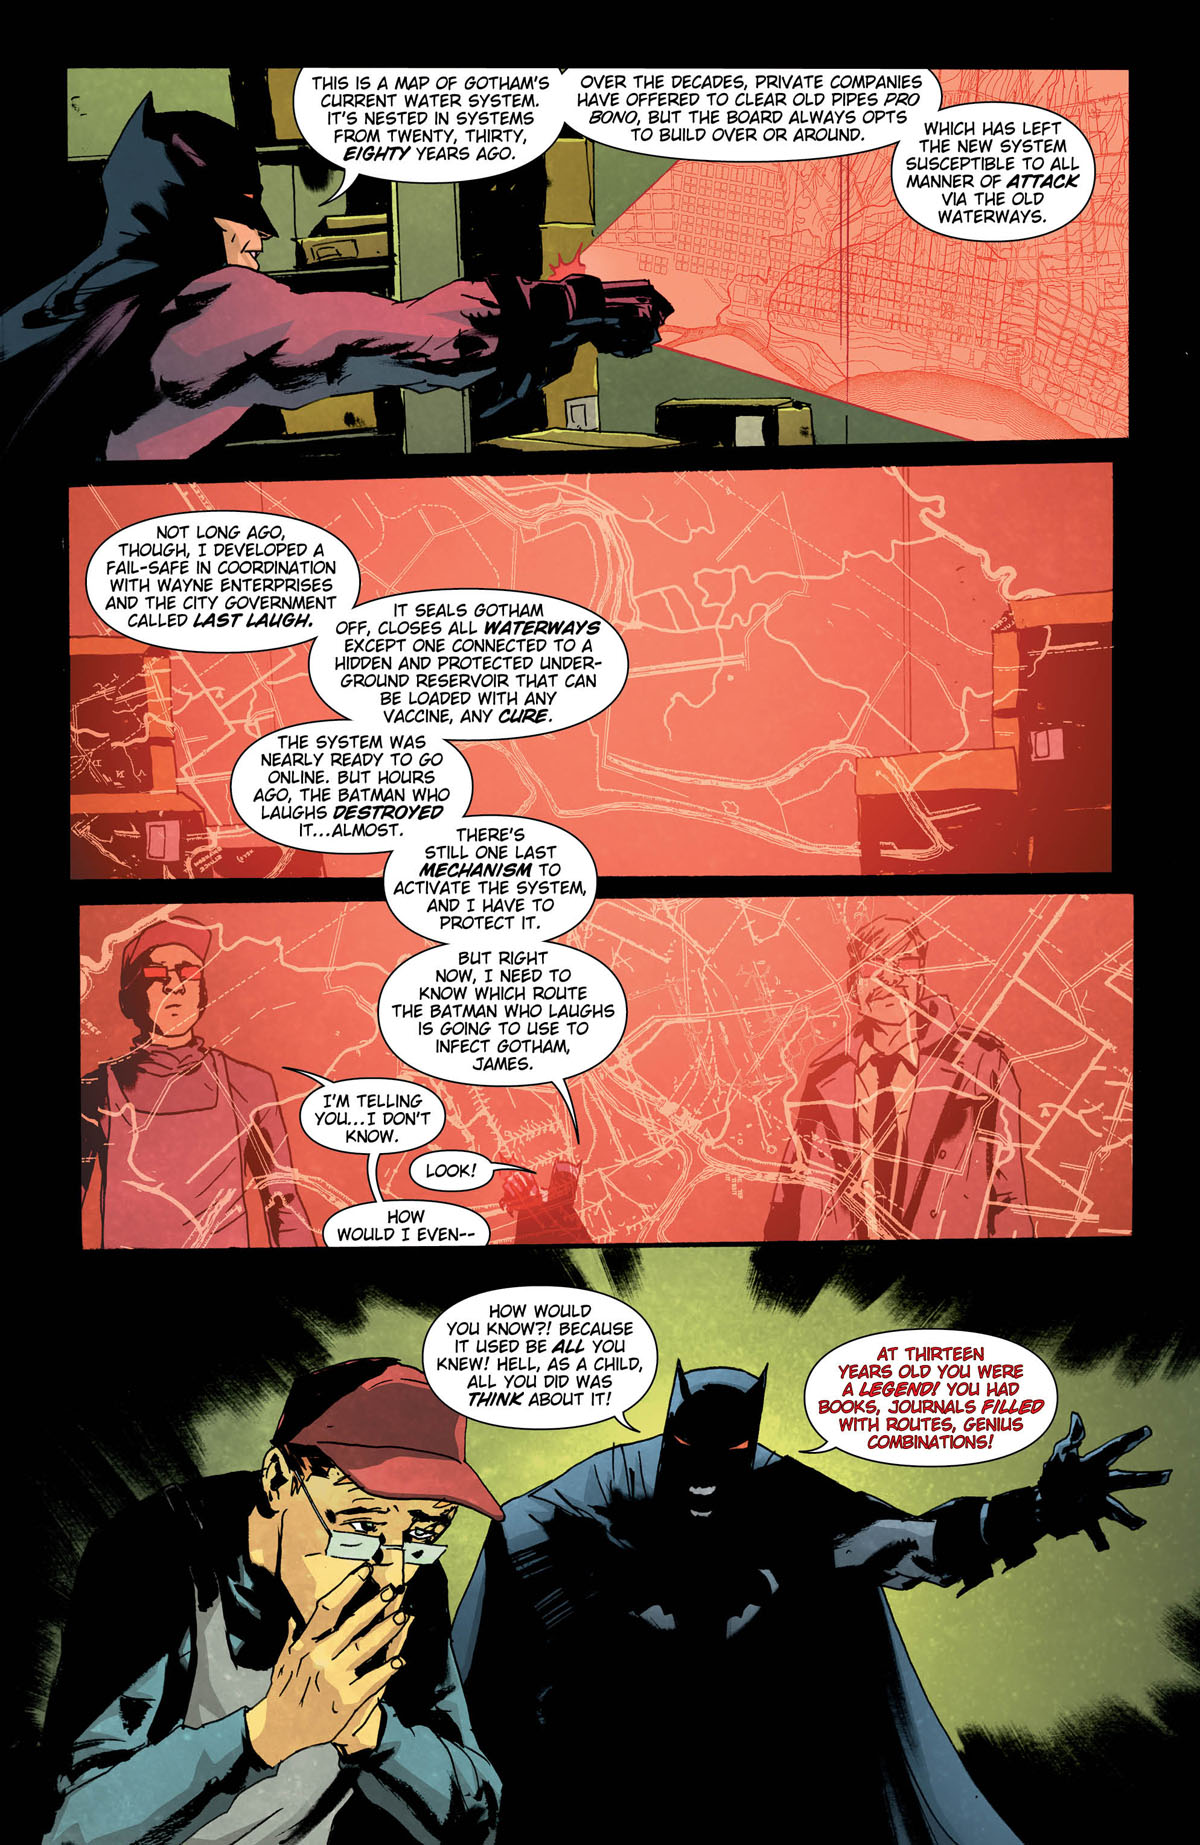 The Batman Who Laughs #3 page 5